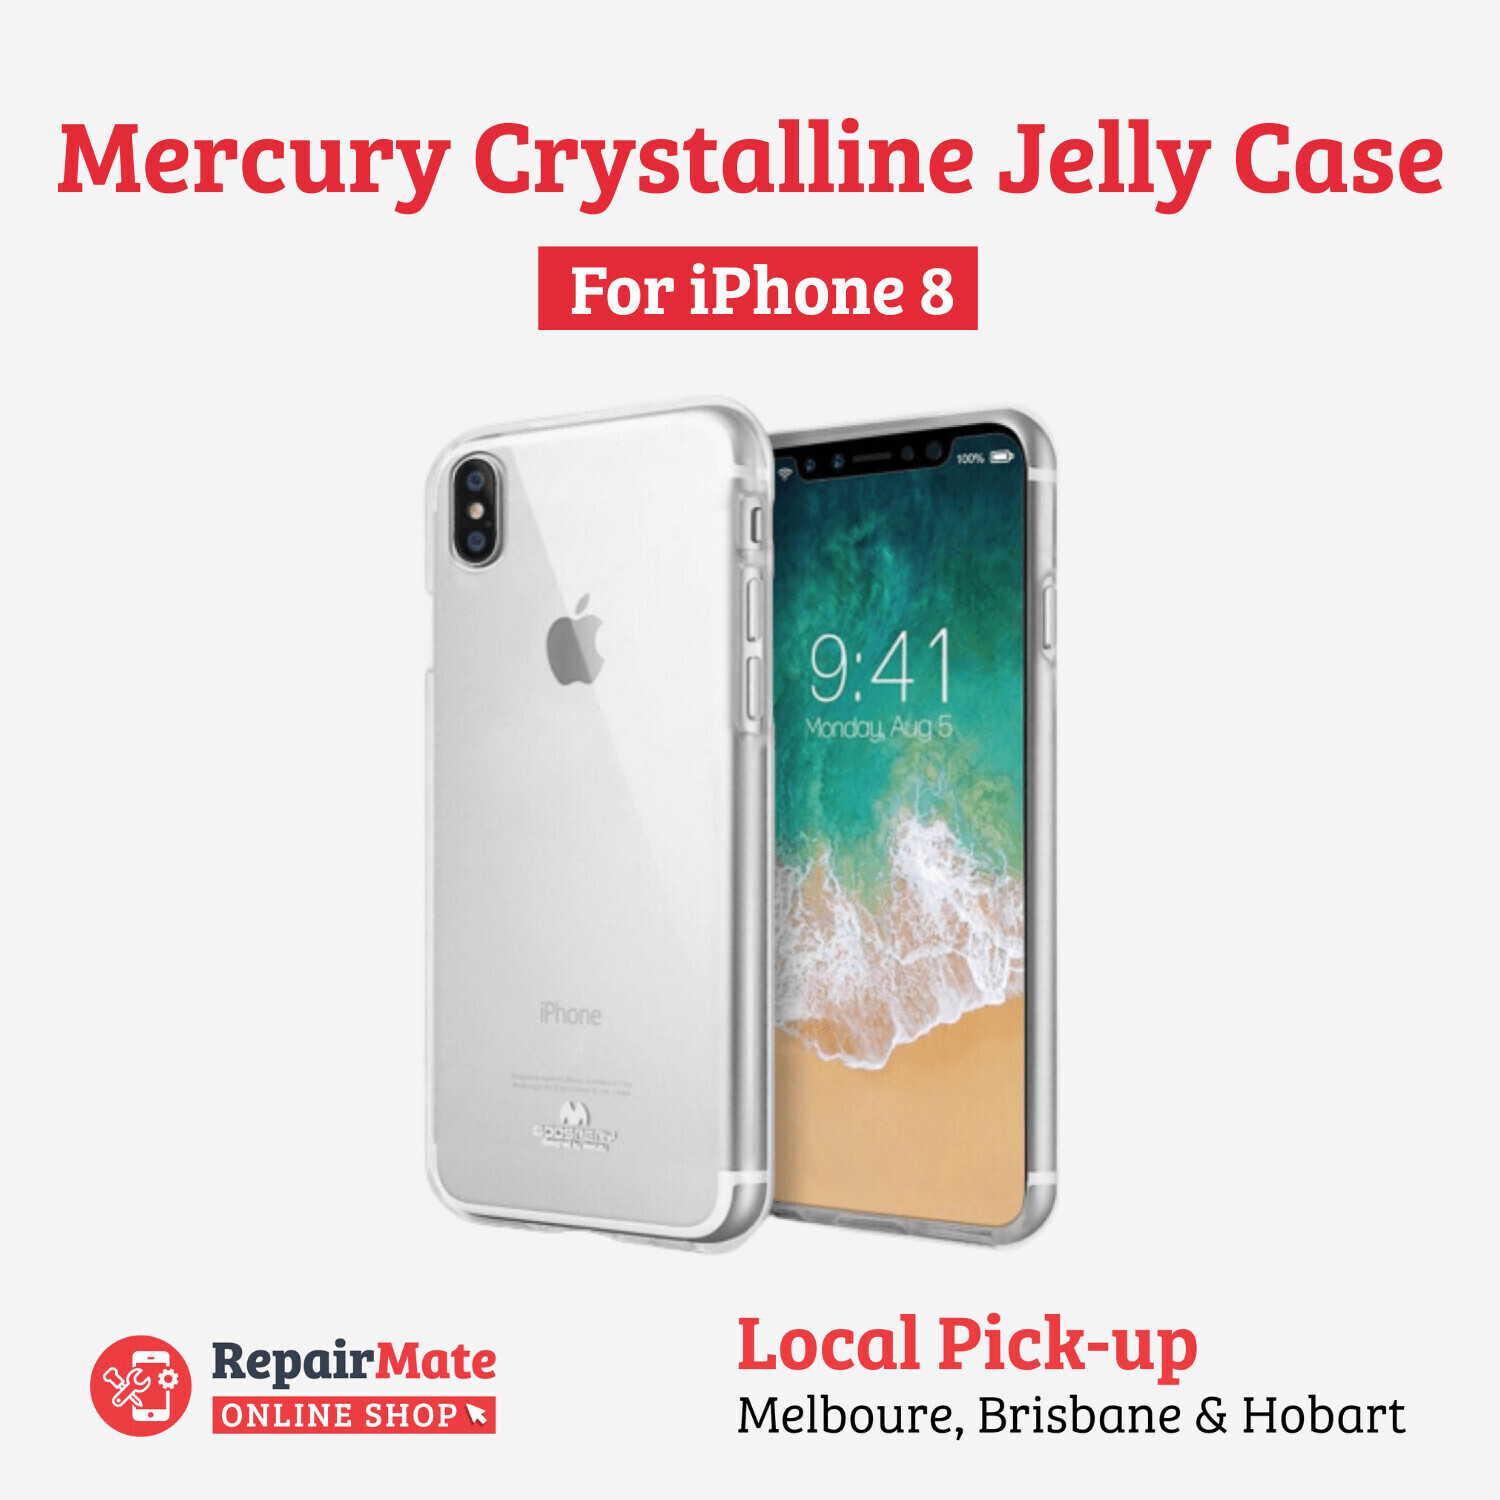 iPhone 8 Mercury Crystalline Jelly Case Cover